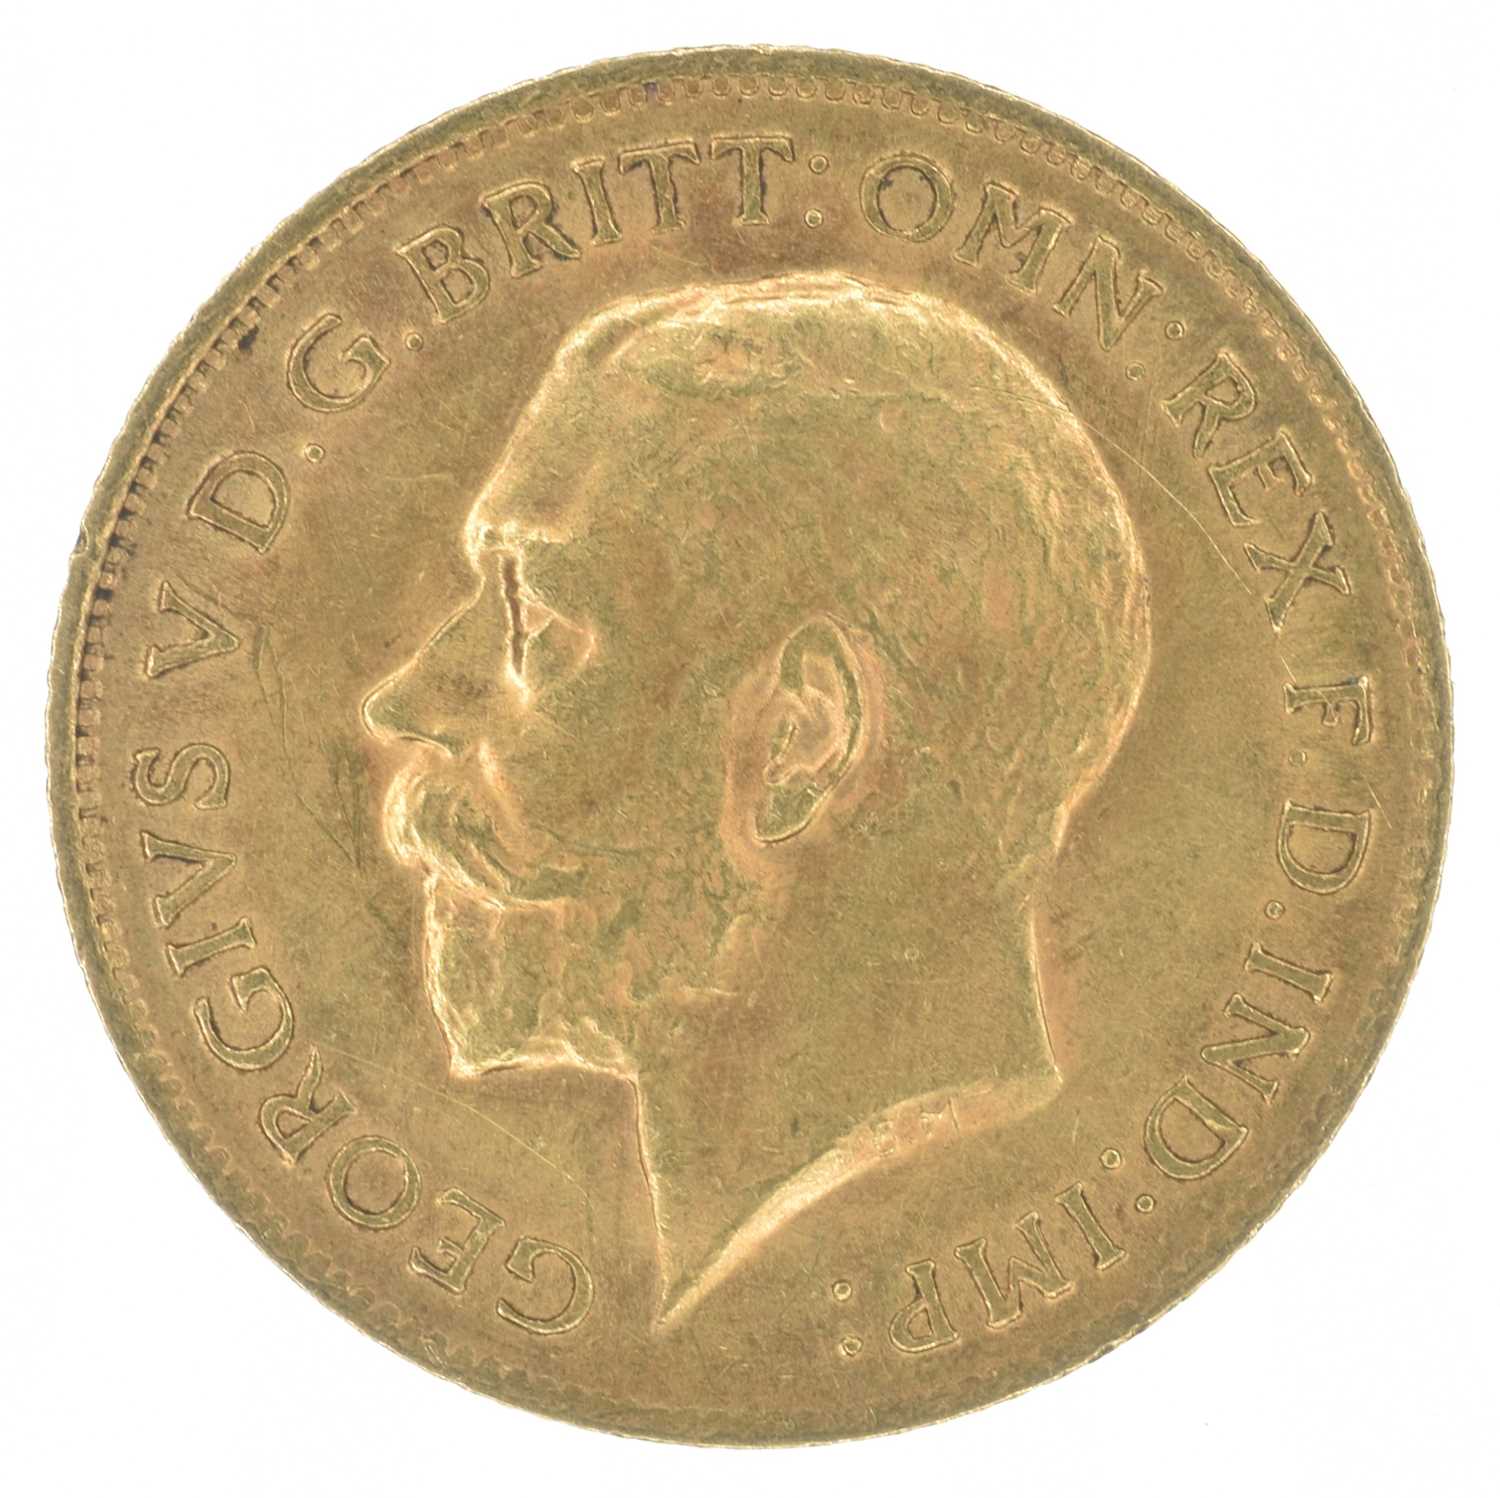 Lot 78 - King George V, Half-Sovereign, 1912, London Mint.